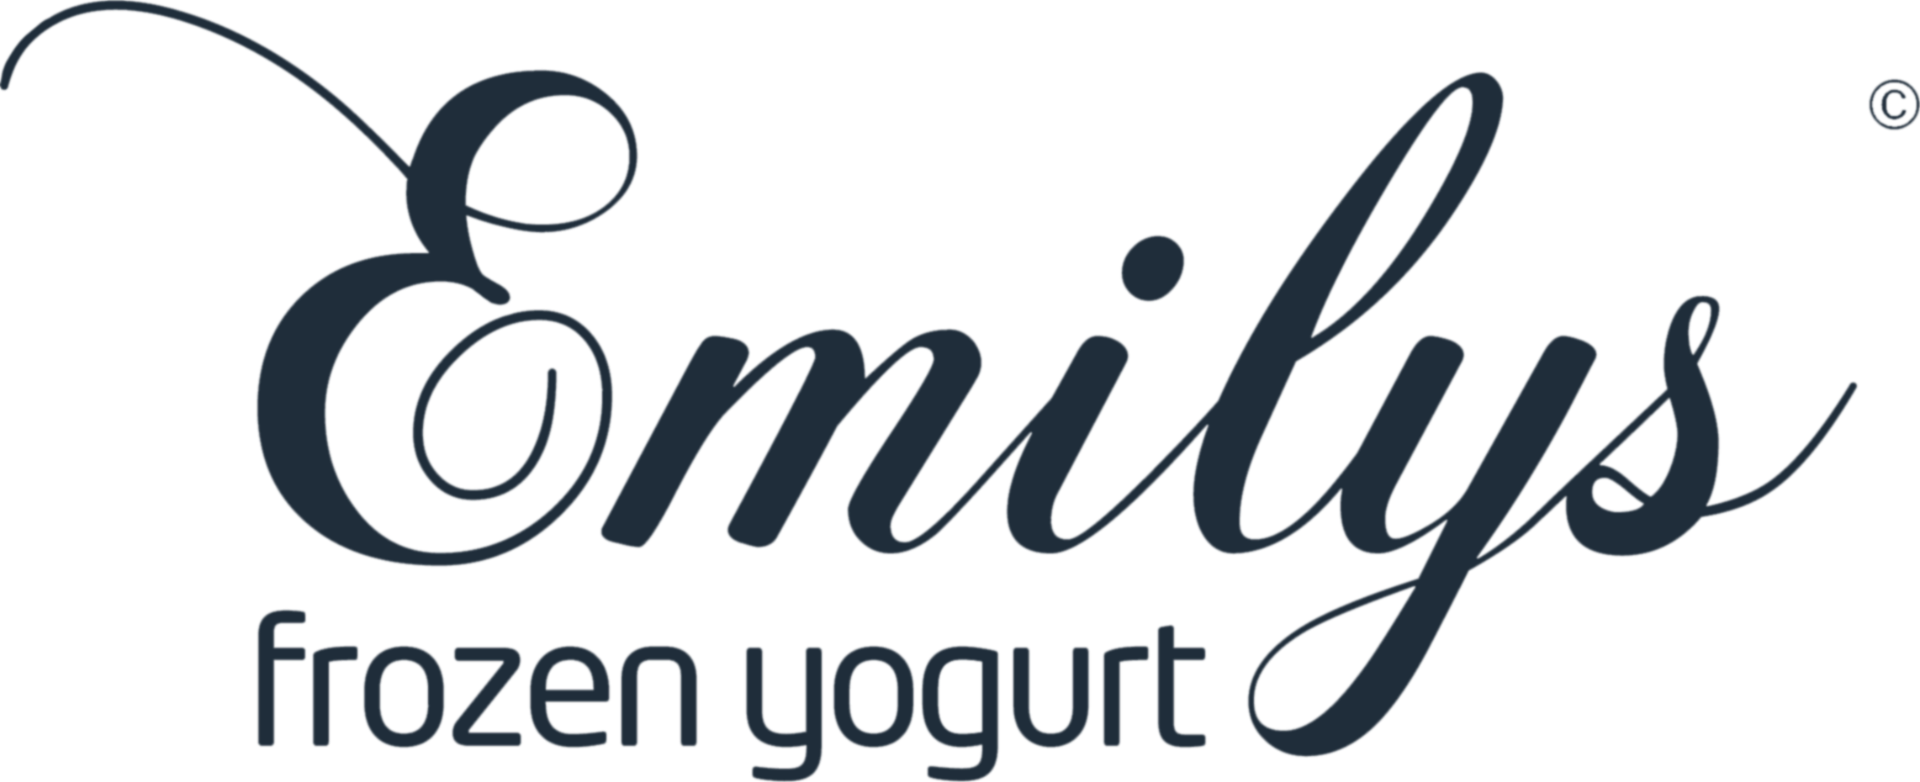 Andreas Fleischmann & Simone Regner — Emilys Frozen Yogurt